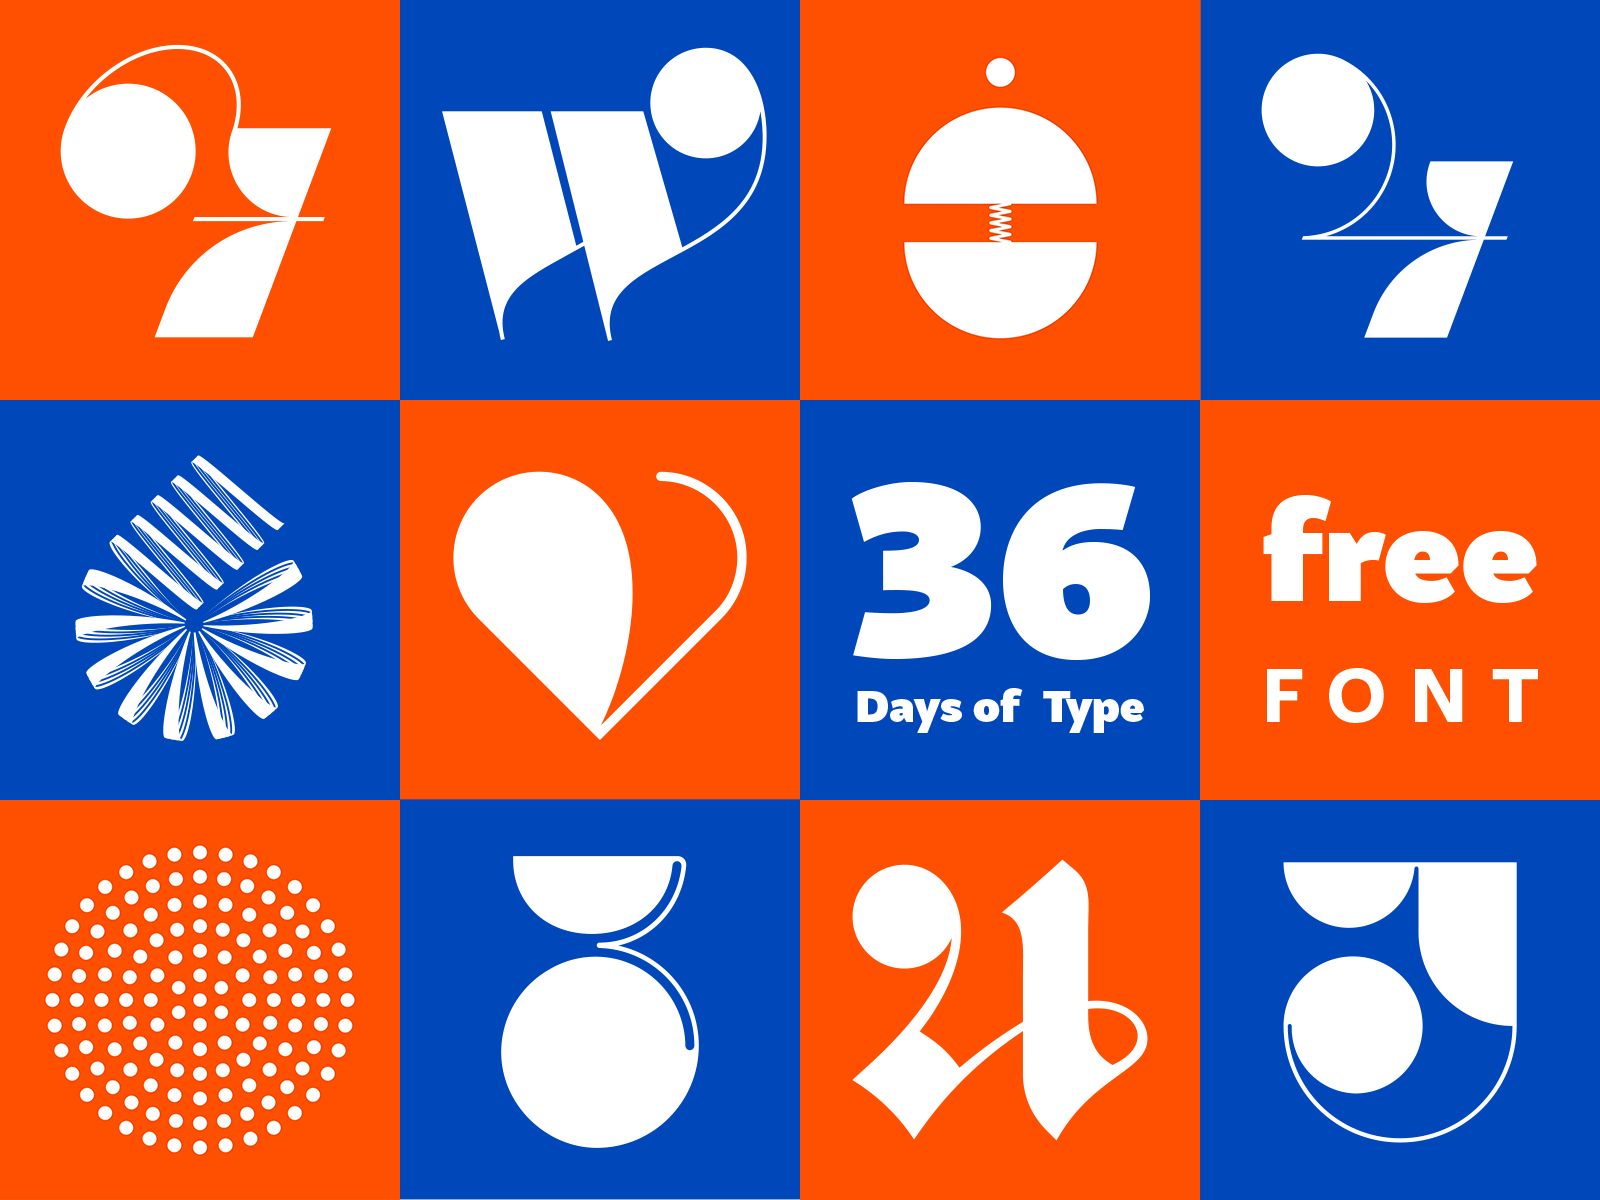 36 Days of Type